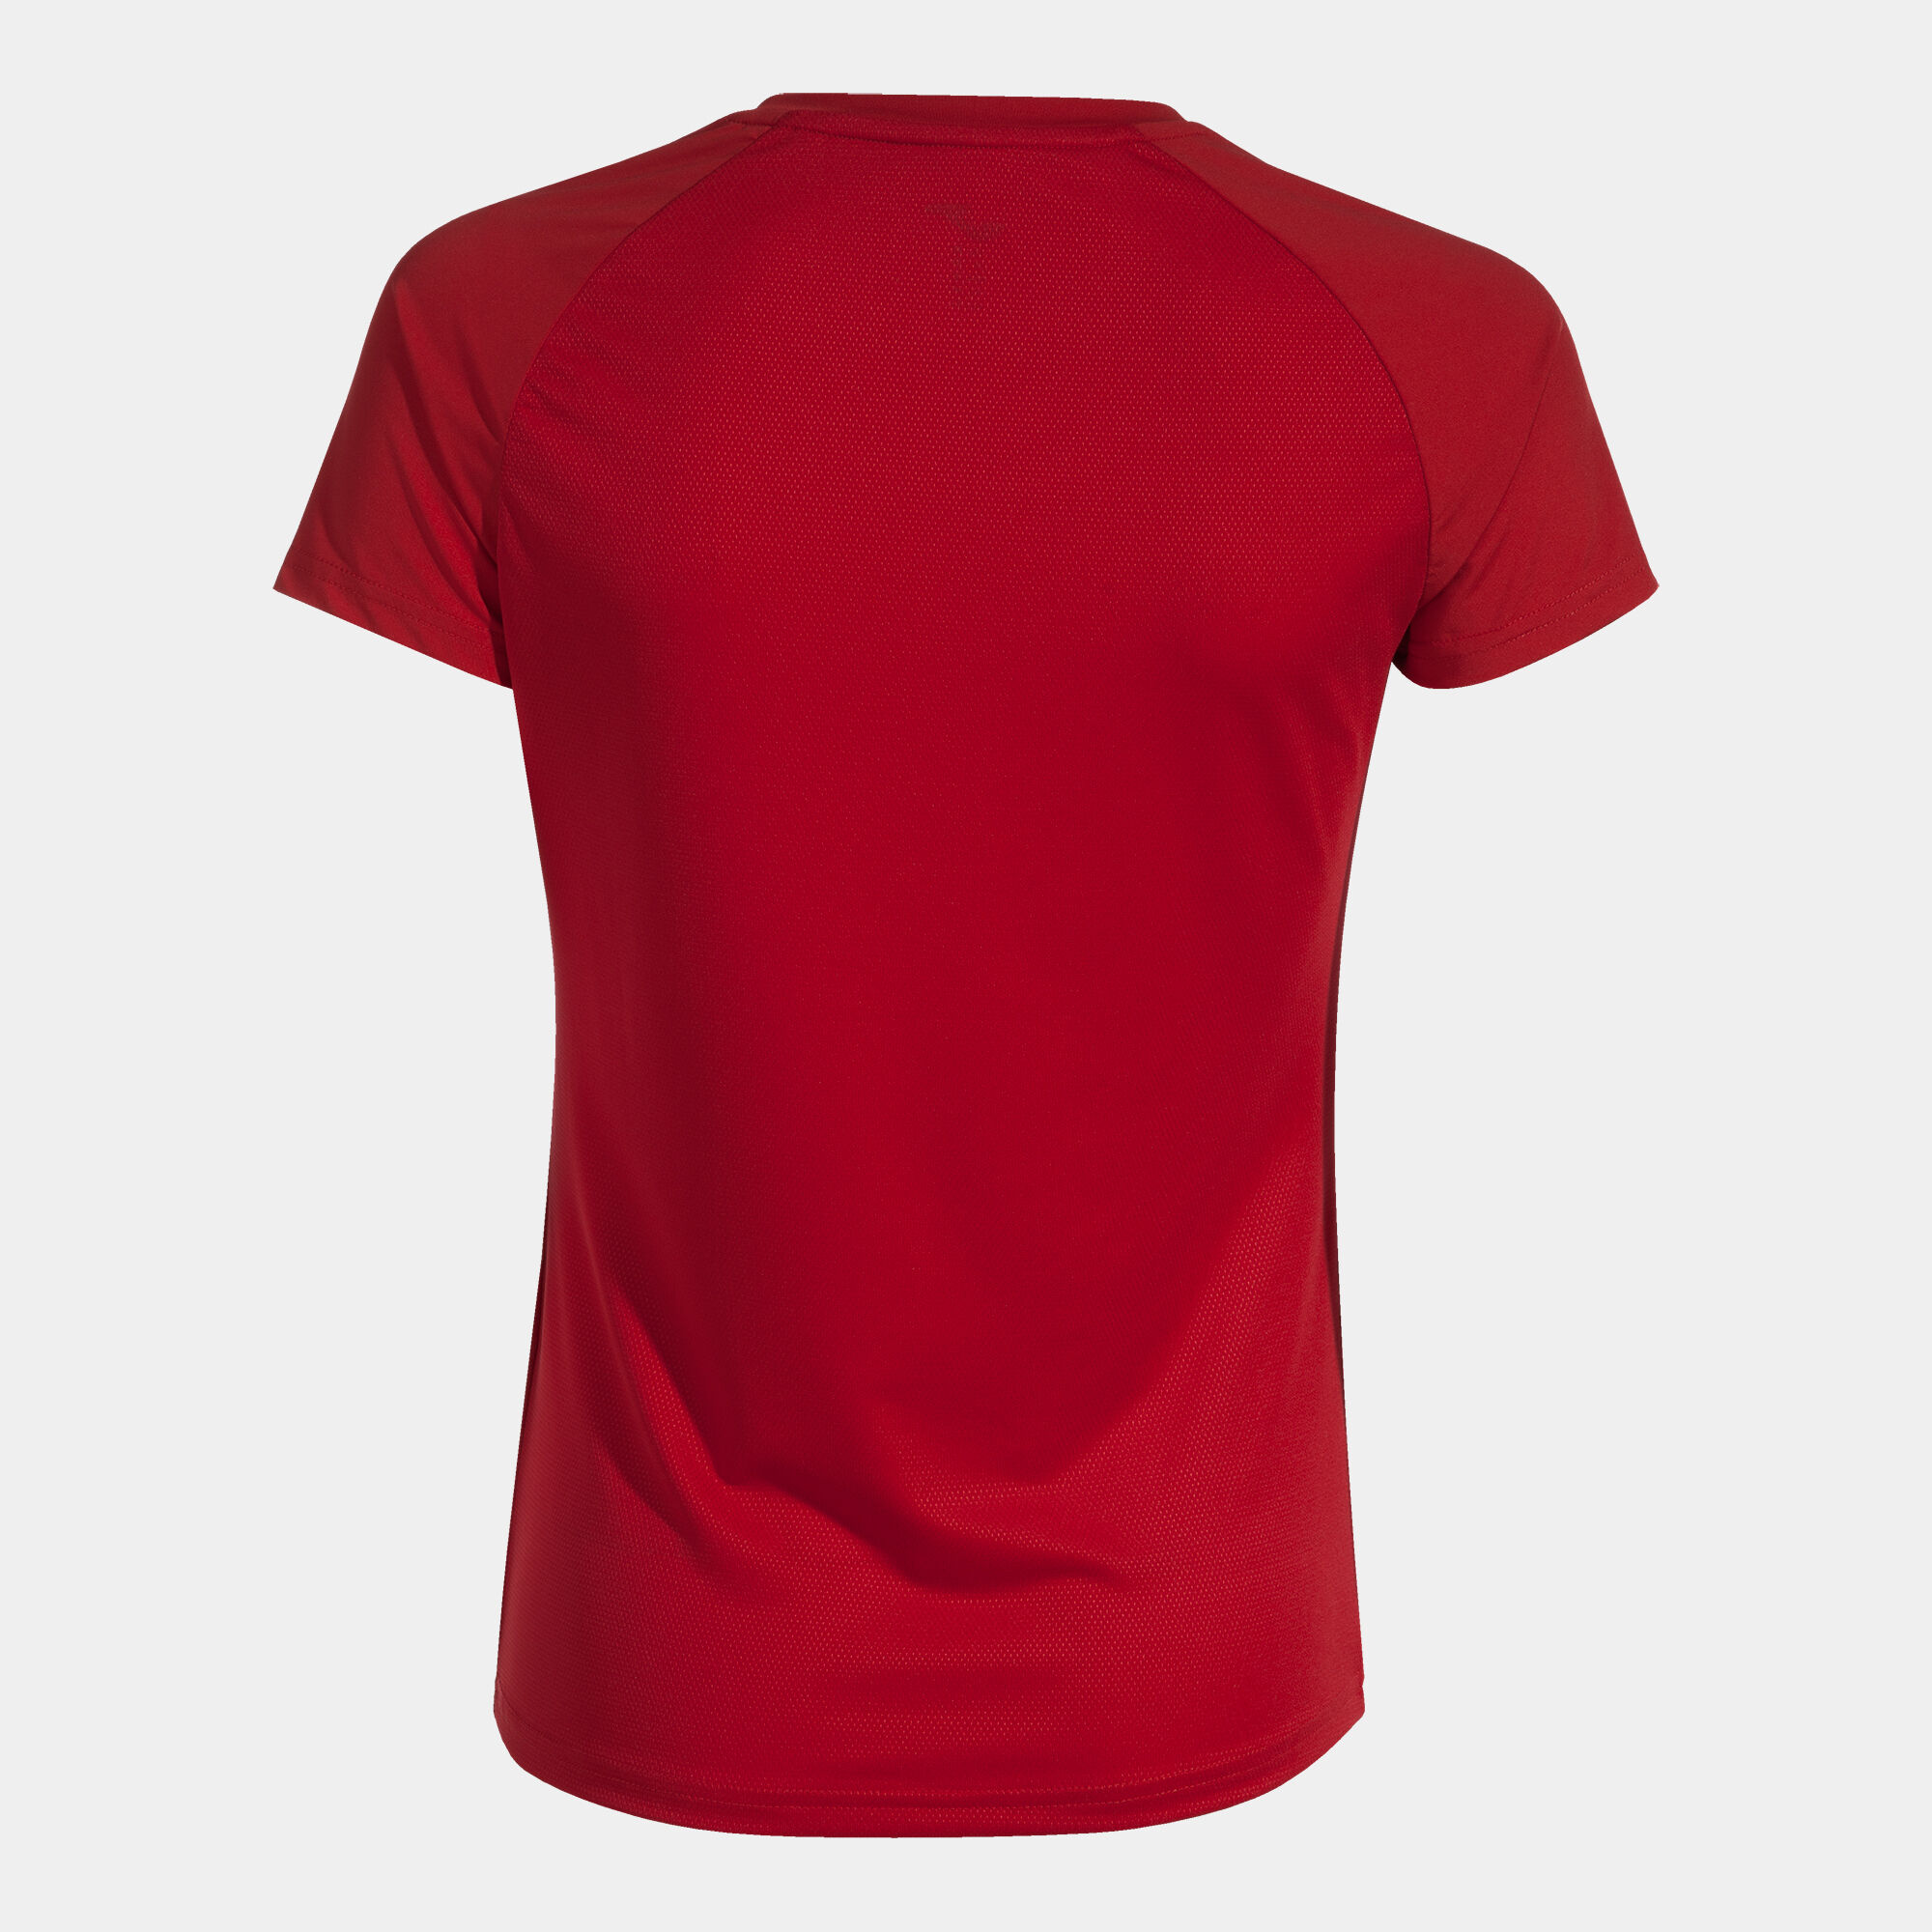 Camiseta manga corta mujer Elite X rojo